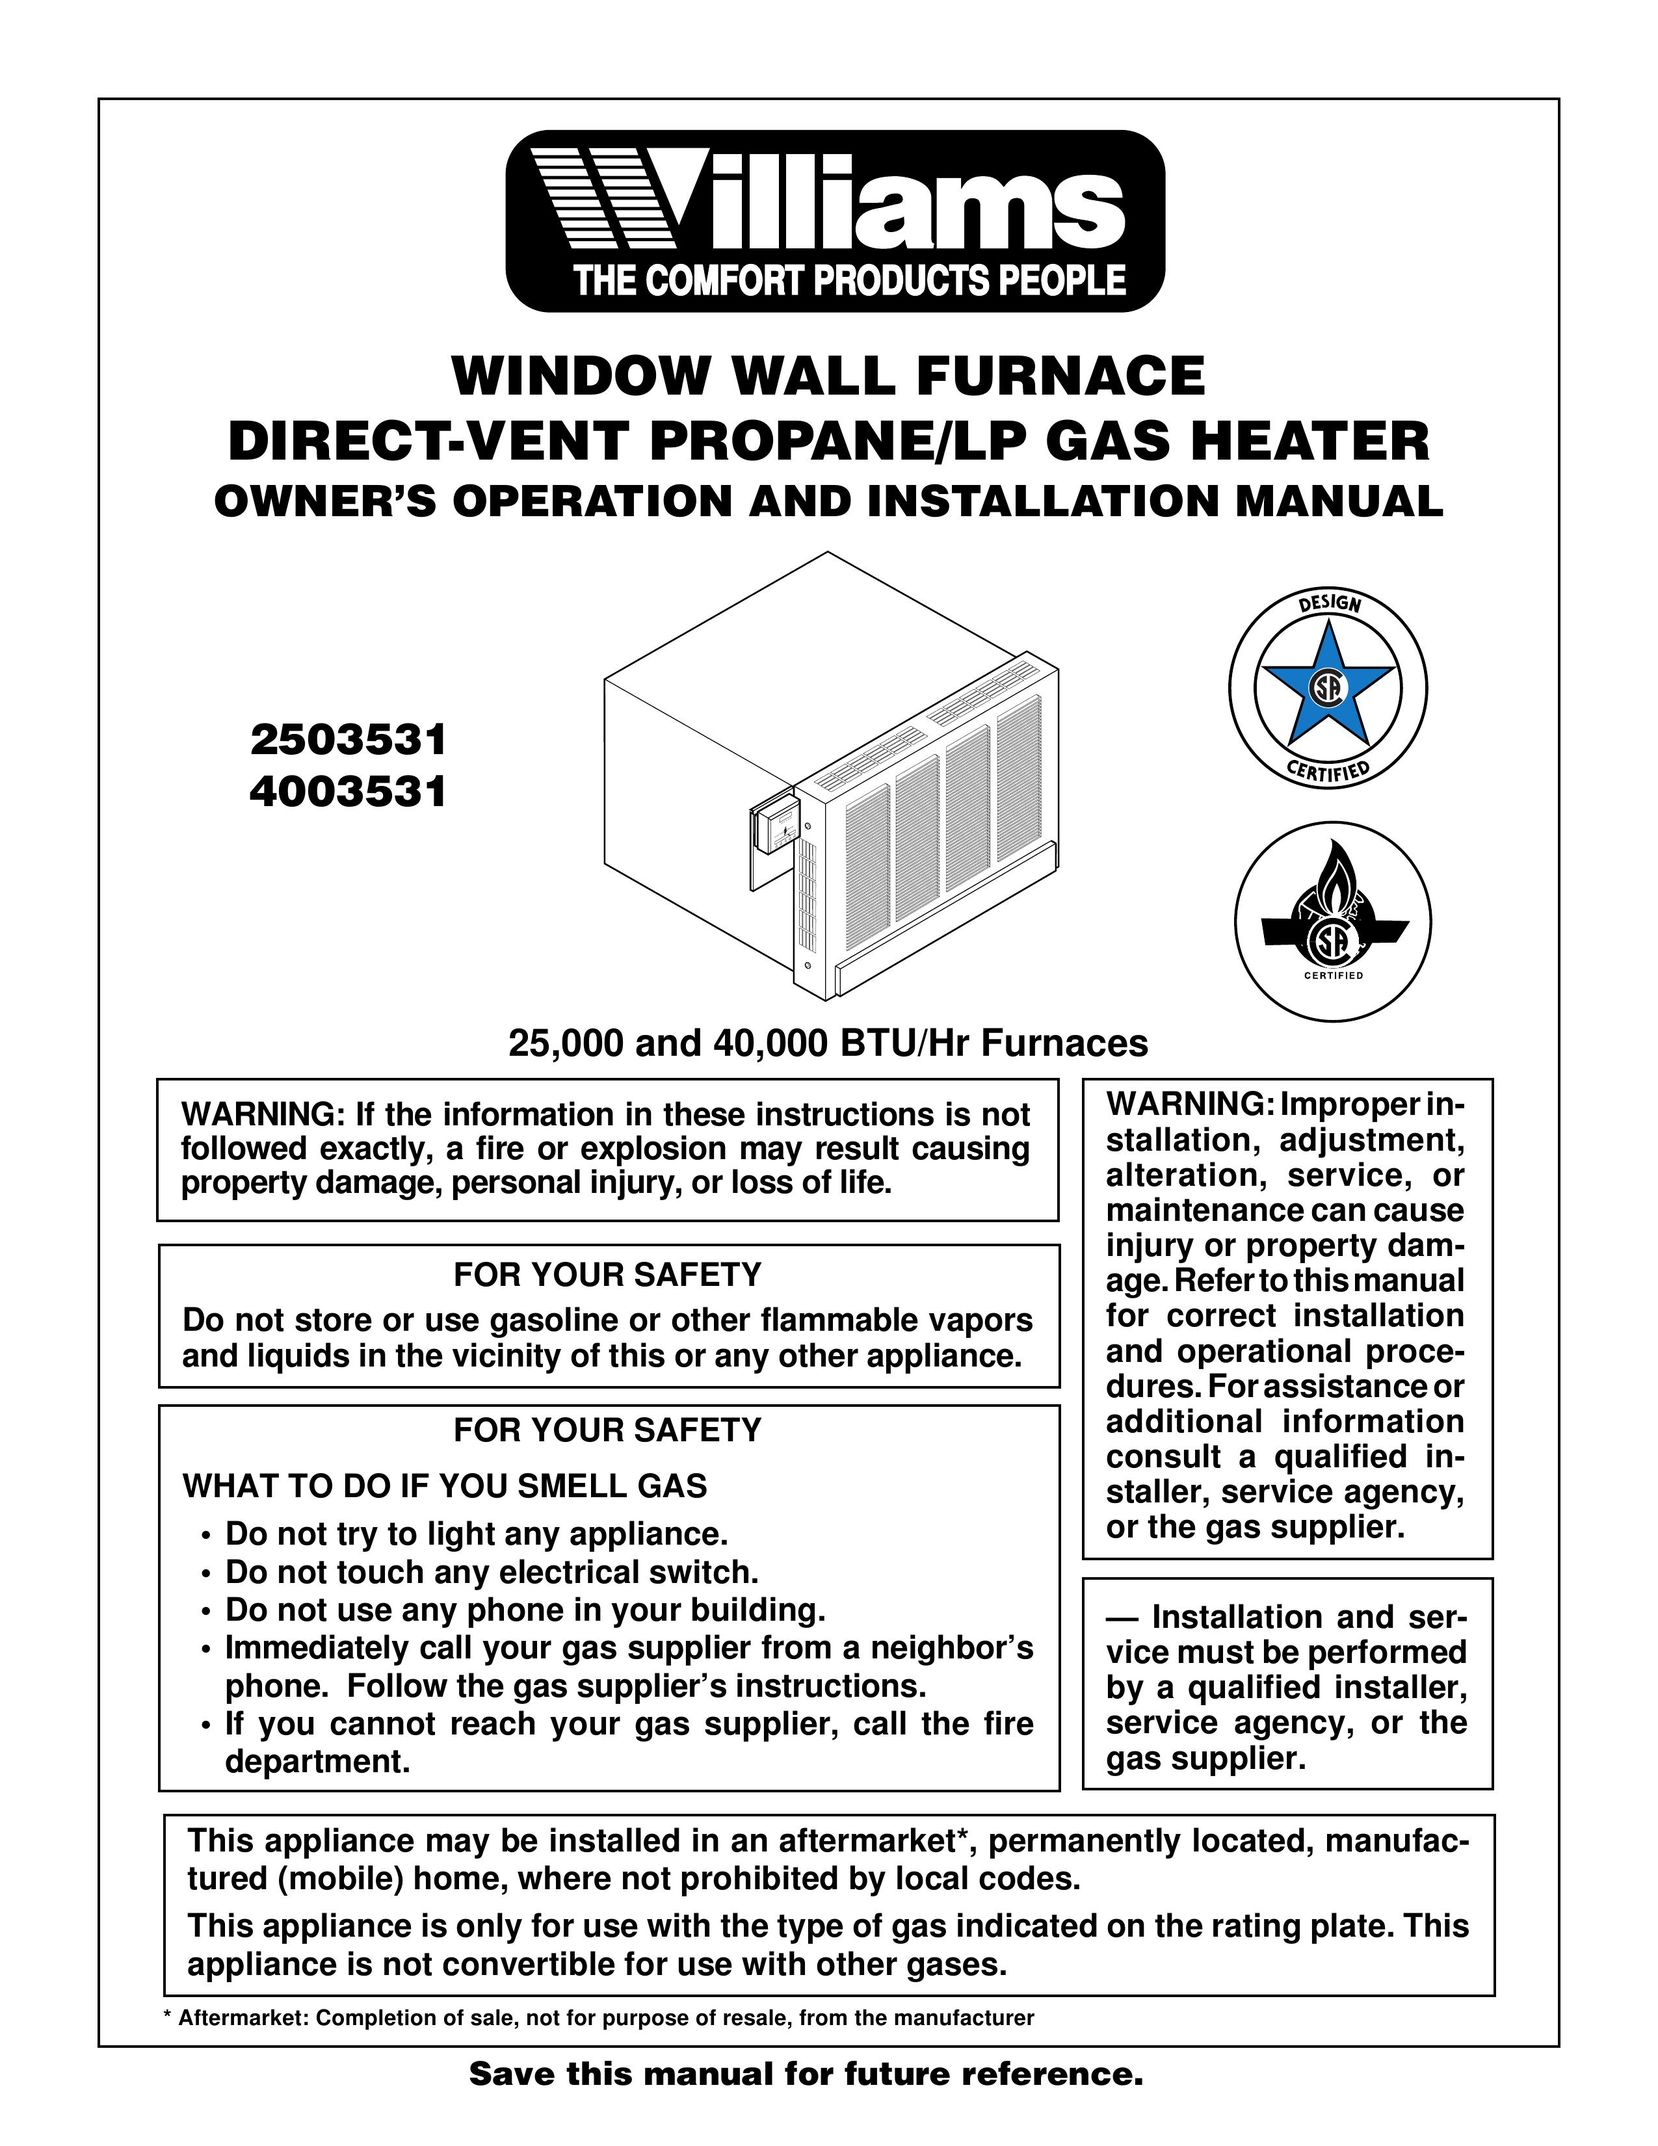 Williams 4003531 Gas Heater User Manual